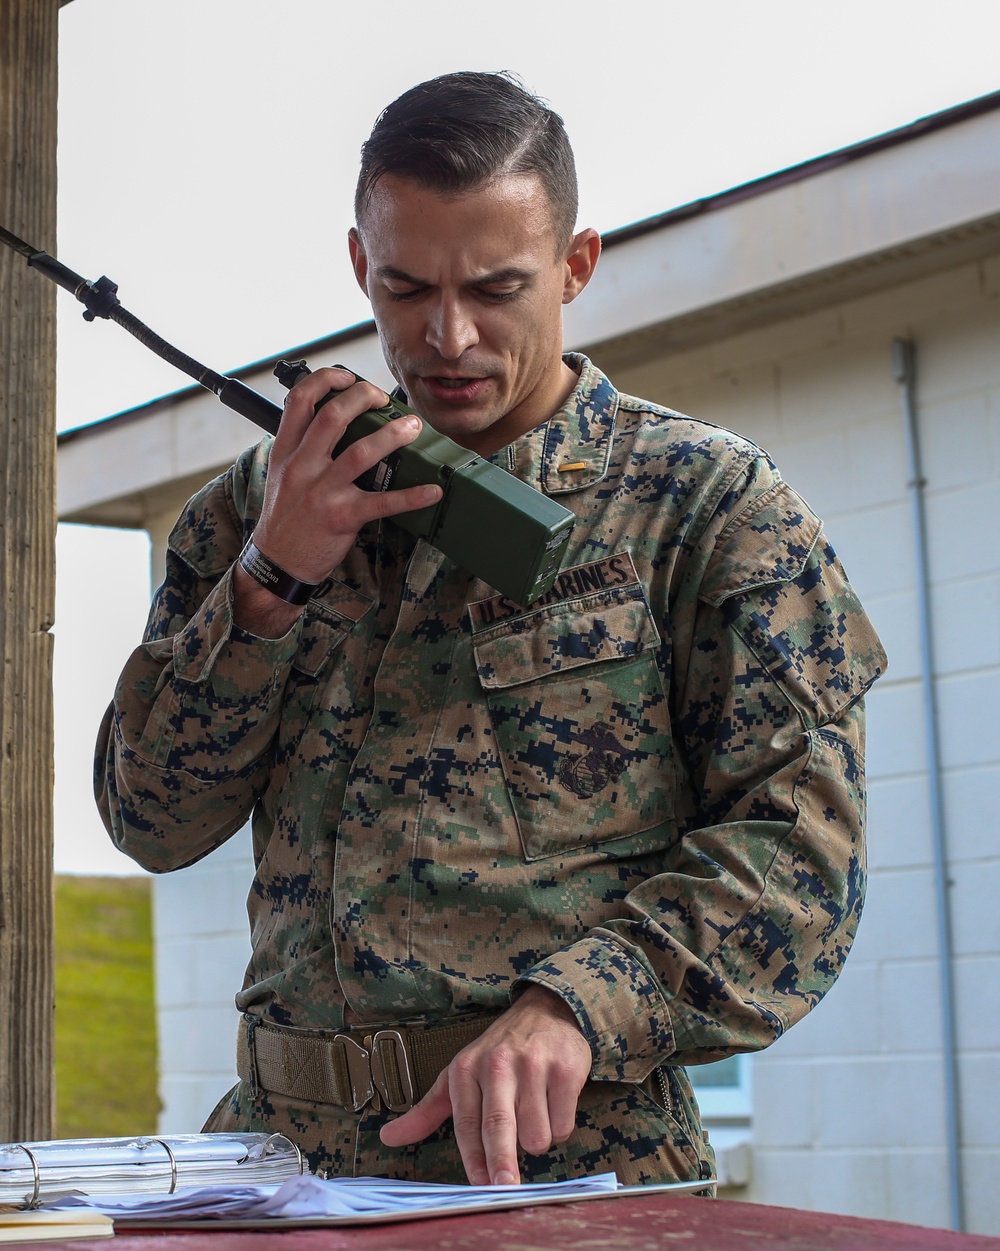 6th Marines Basic Skills Training Range